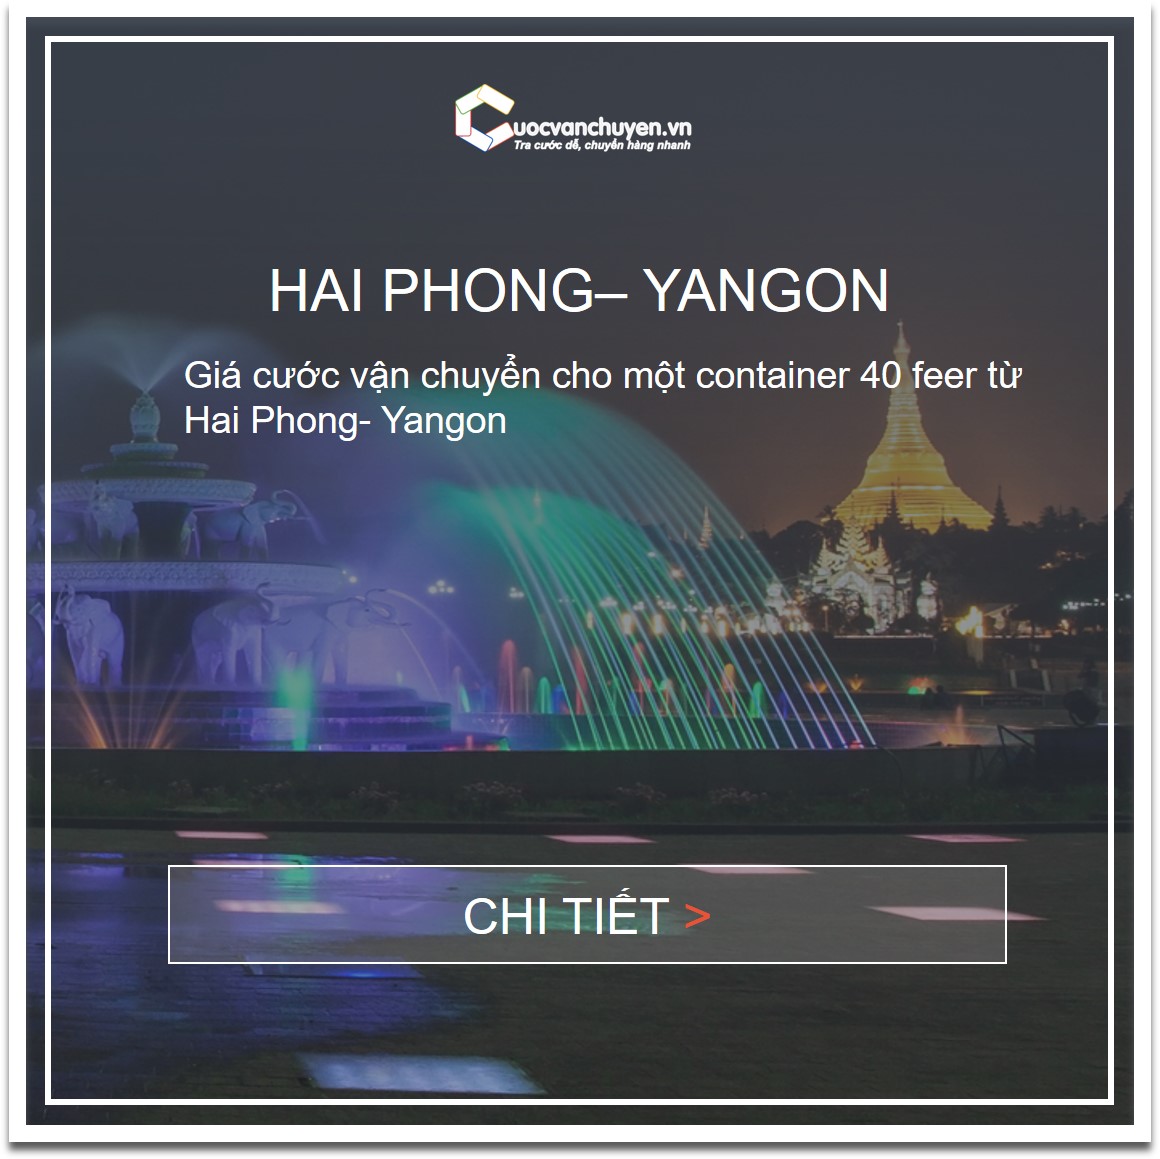 van-chuyen-hang-hoa-tu-hai-phong-di-Yangon-1_cuocvanchuyen_vn.jpg